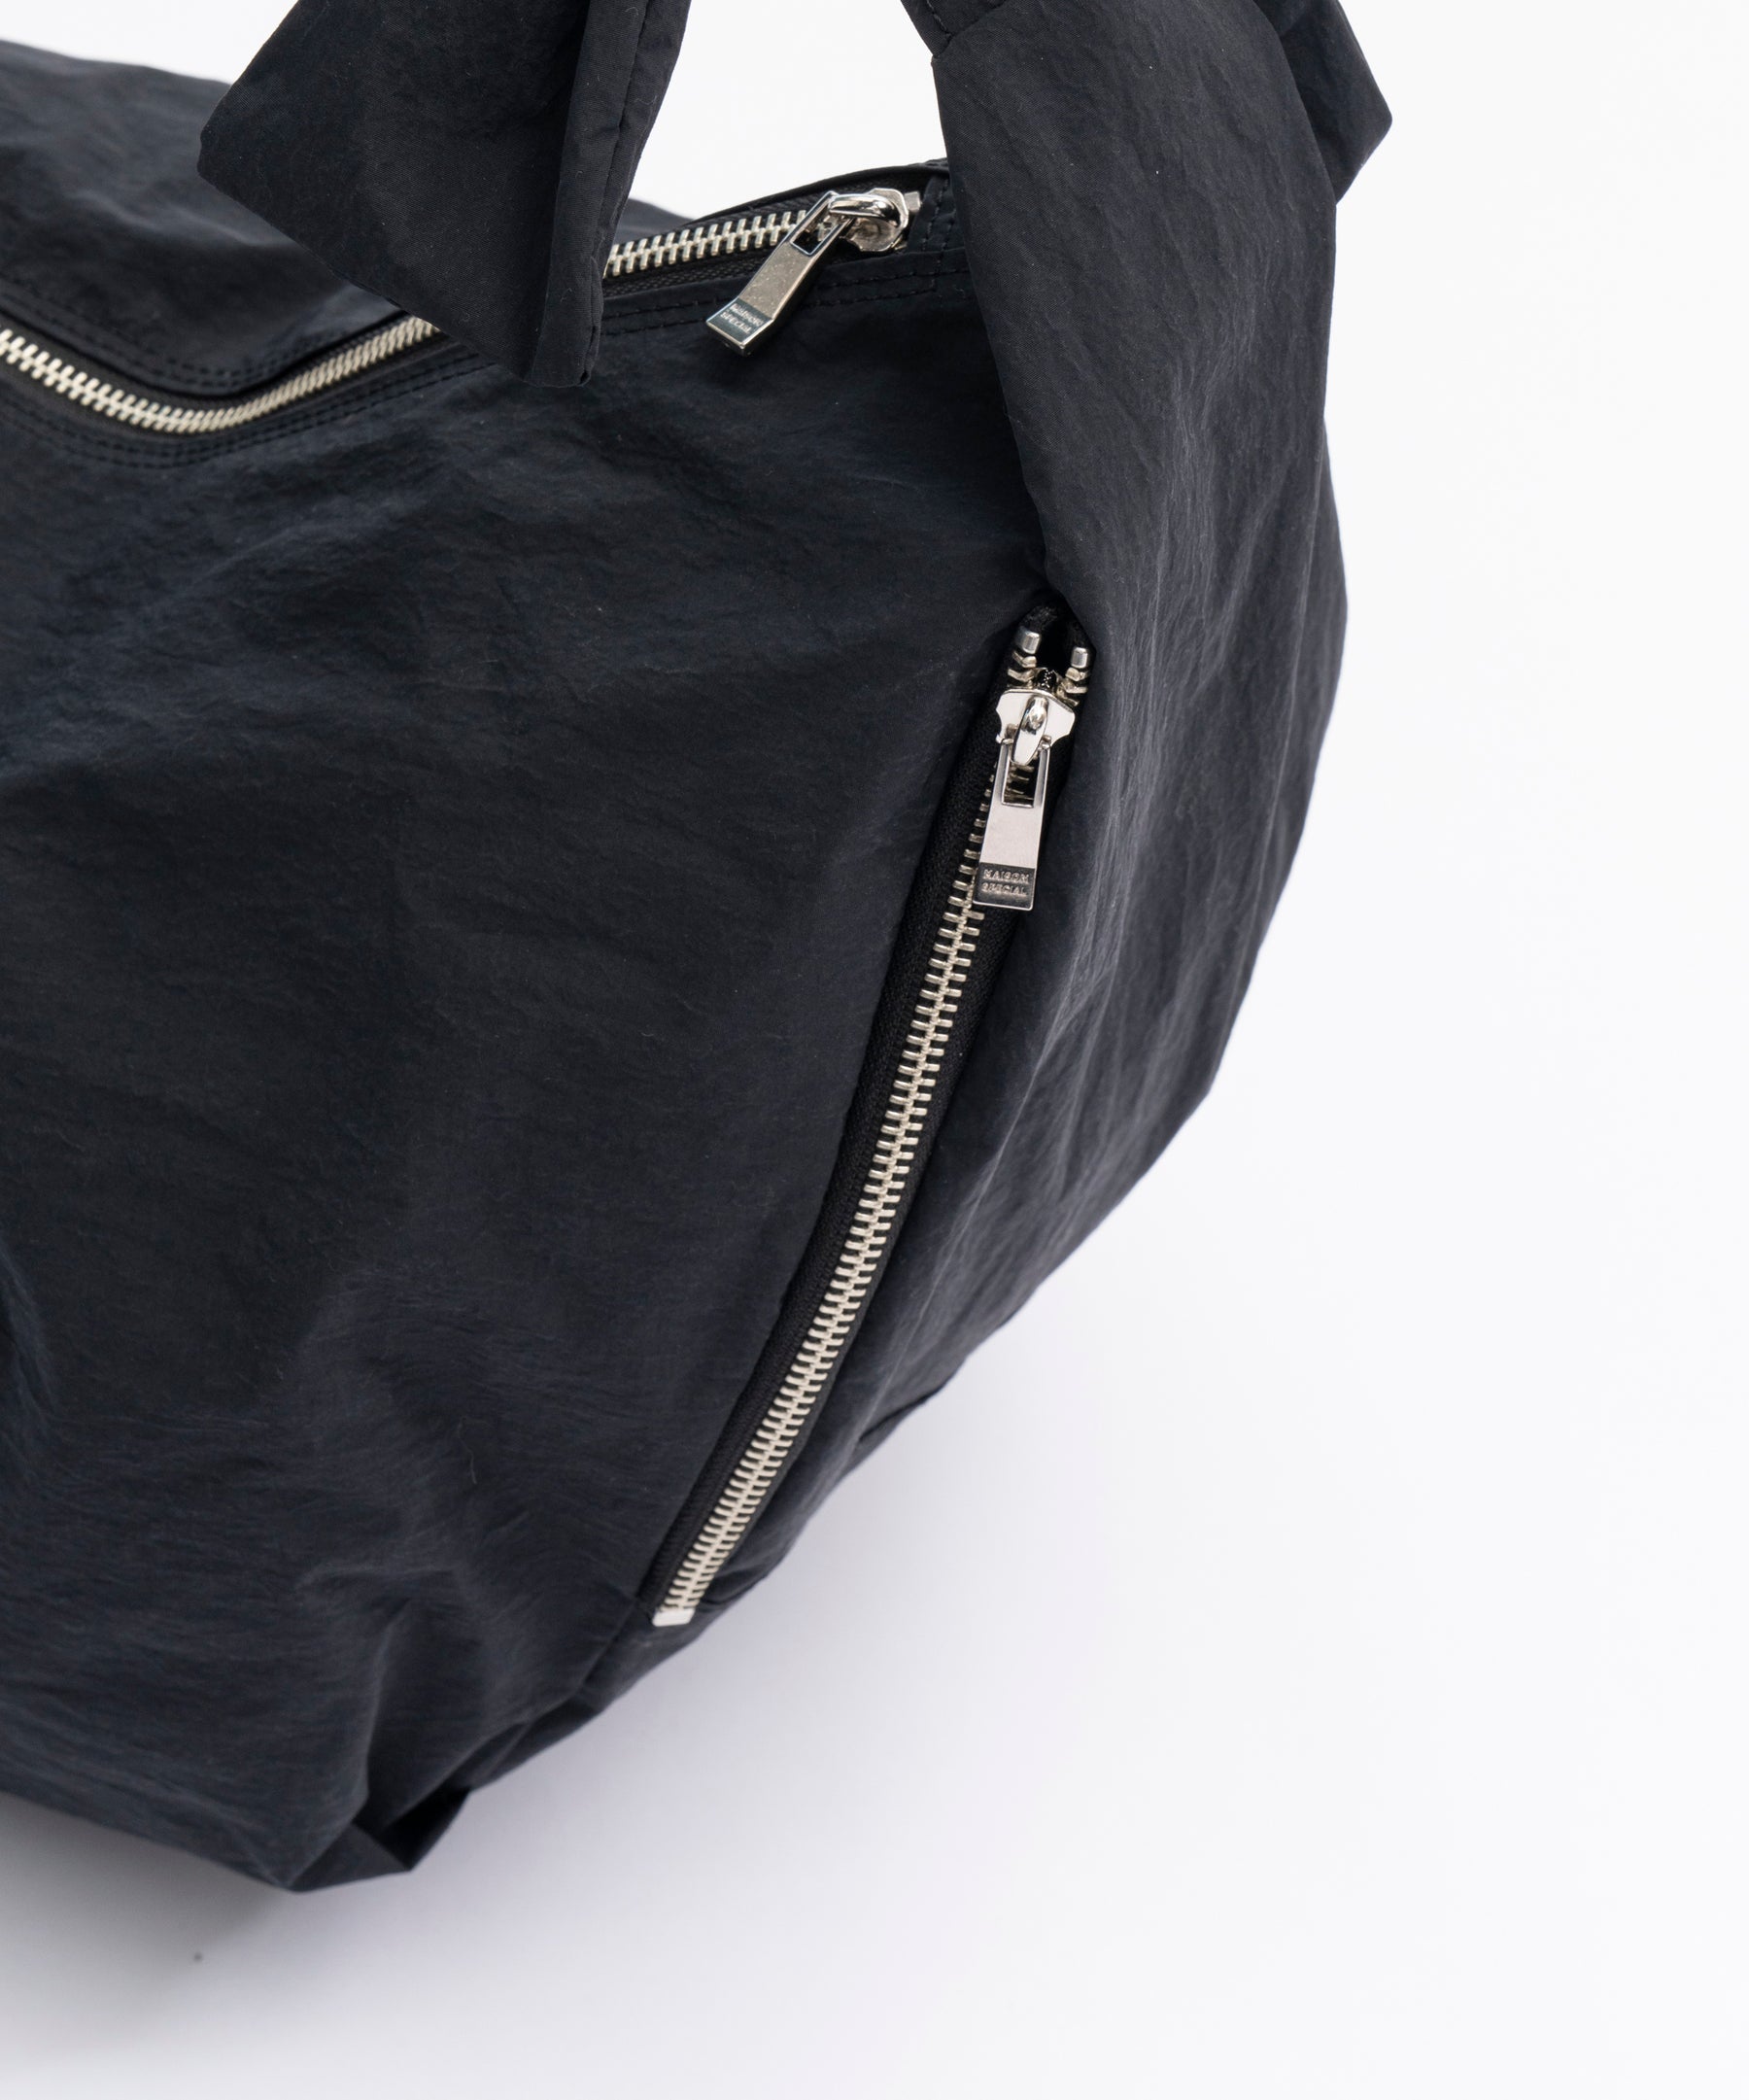 KONBU Nylon Shoulder “BANANA” Bag